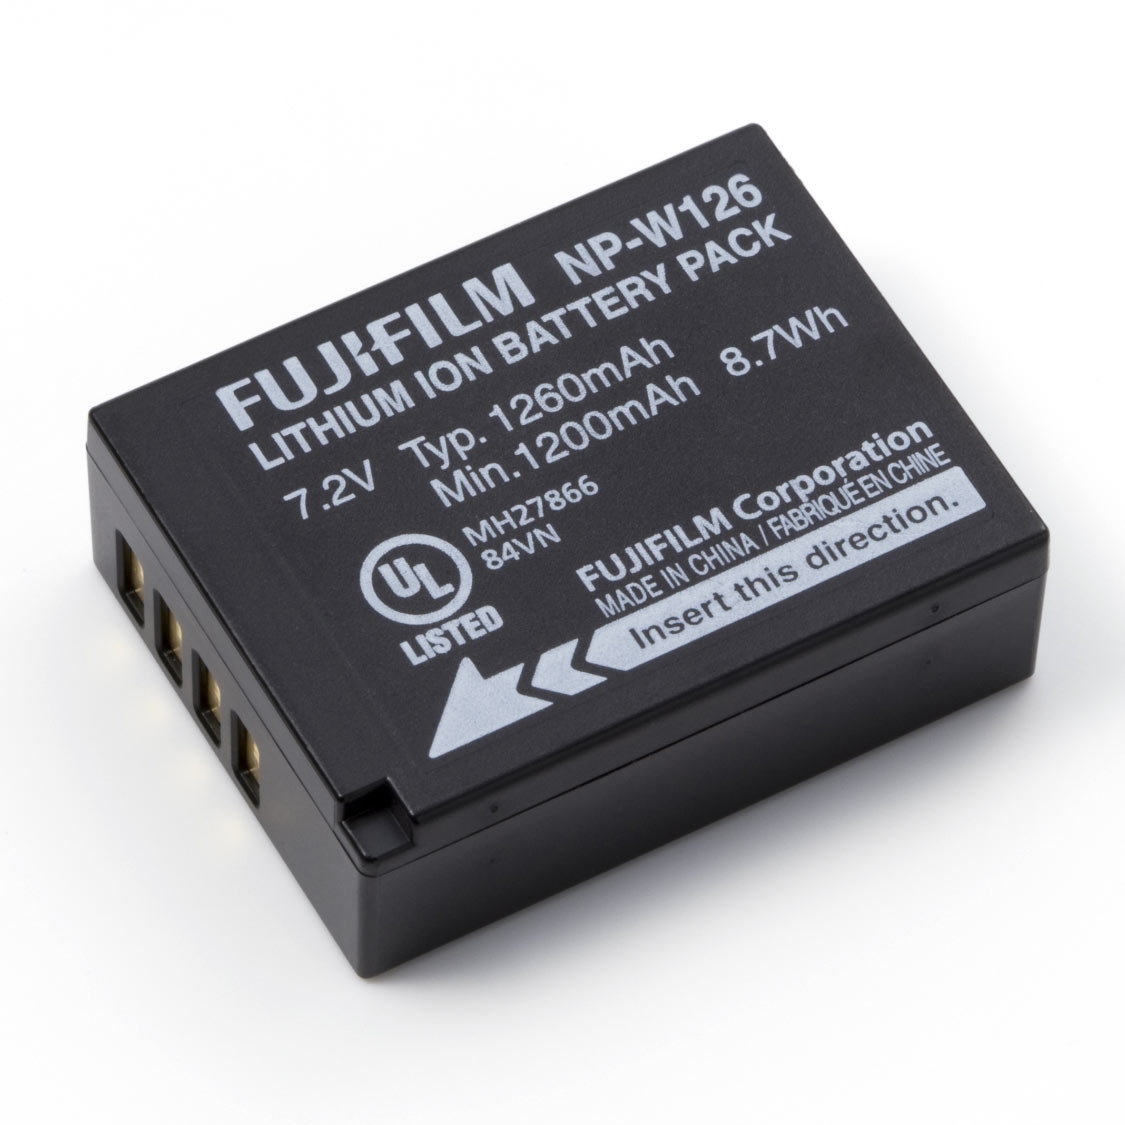 Fujifilm EF-BP1 Battery Pack